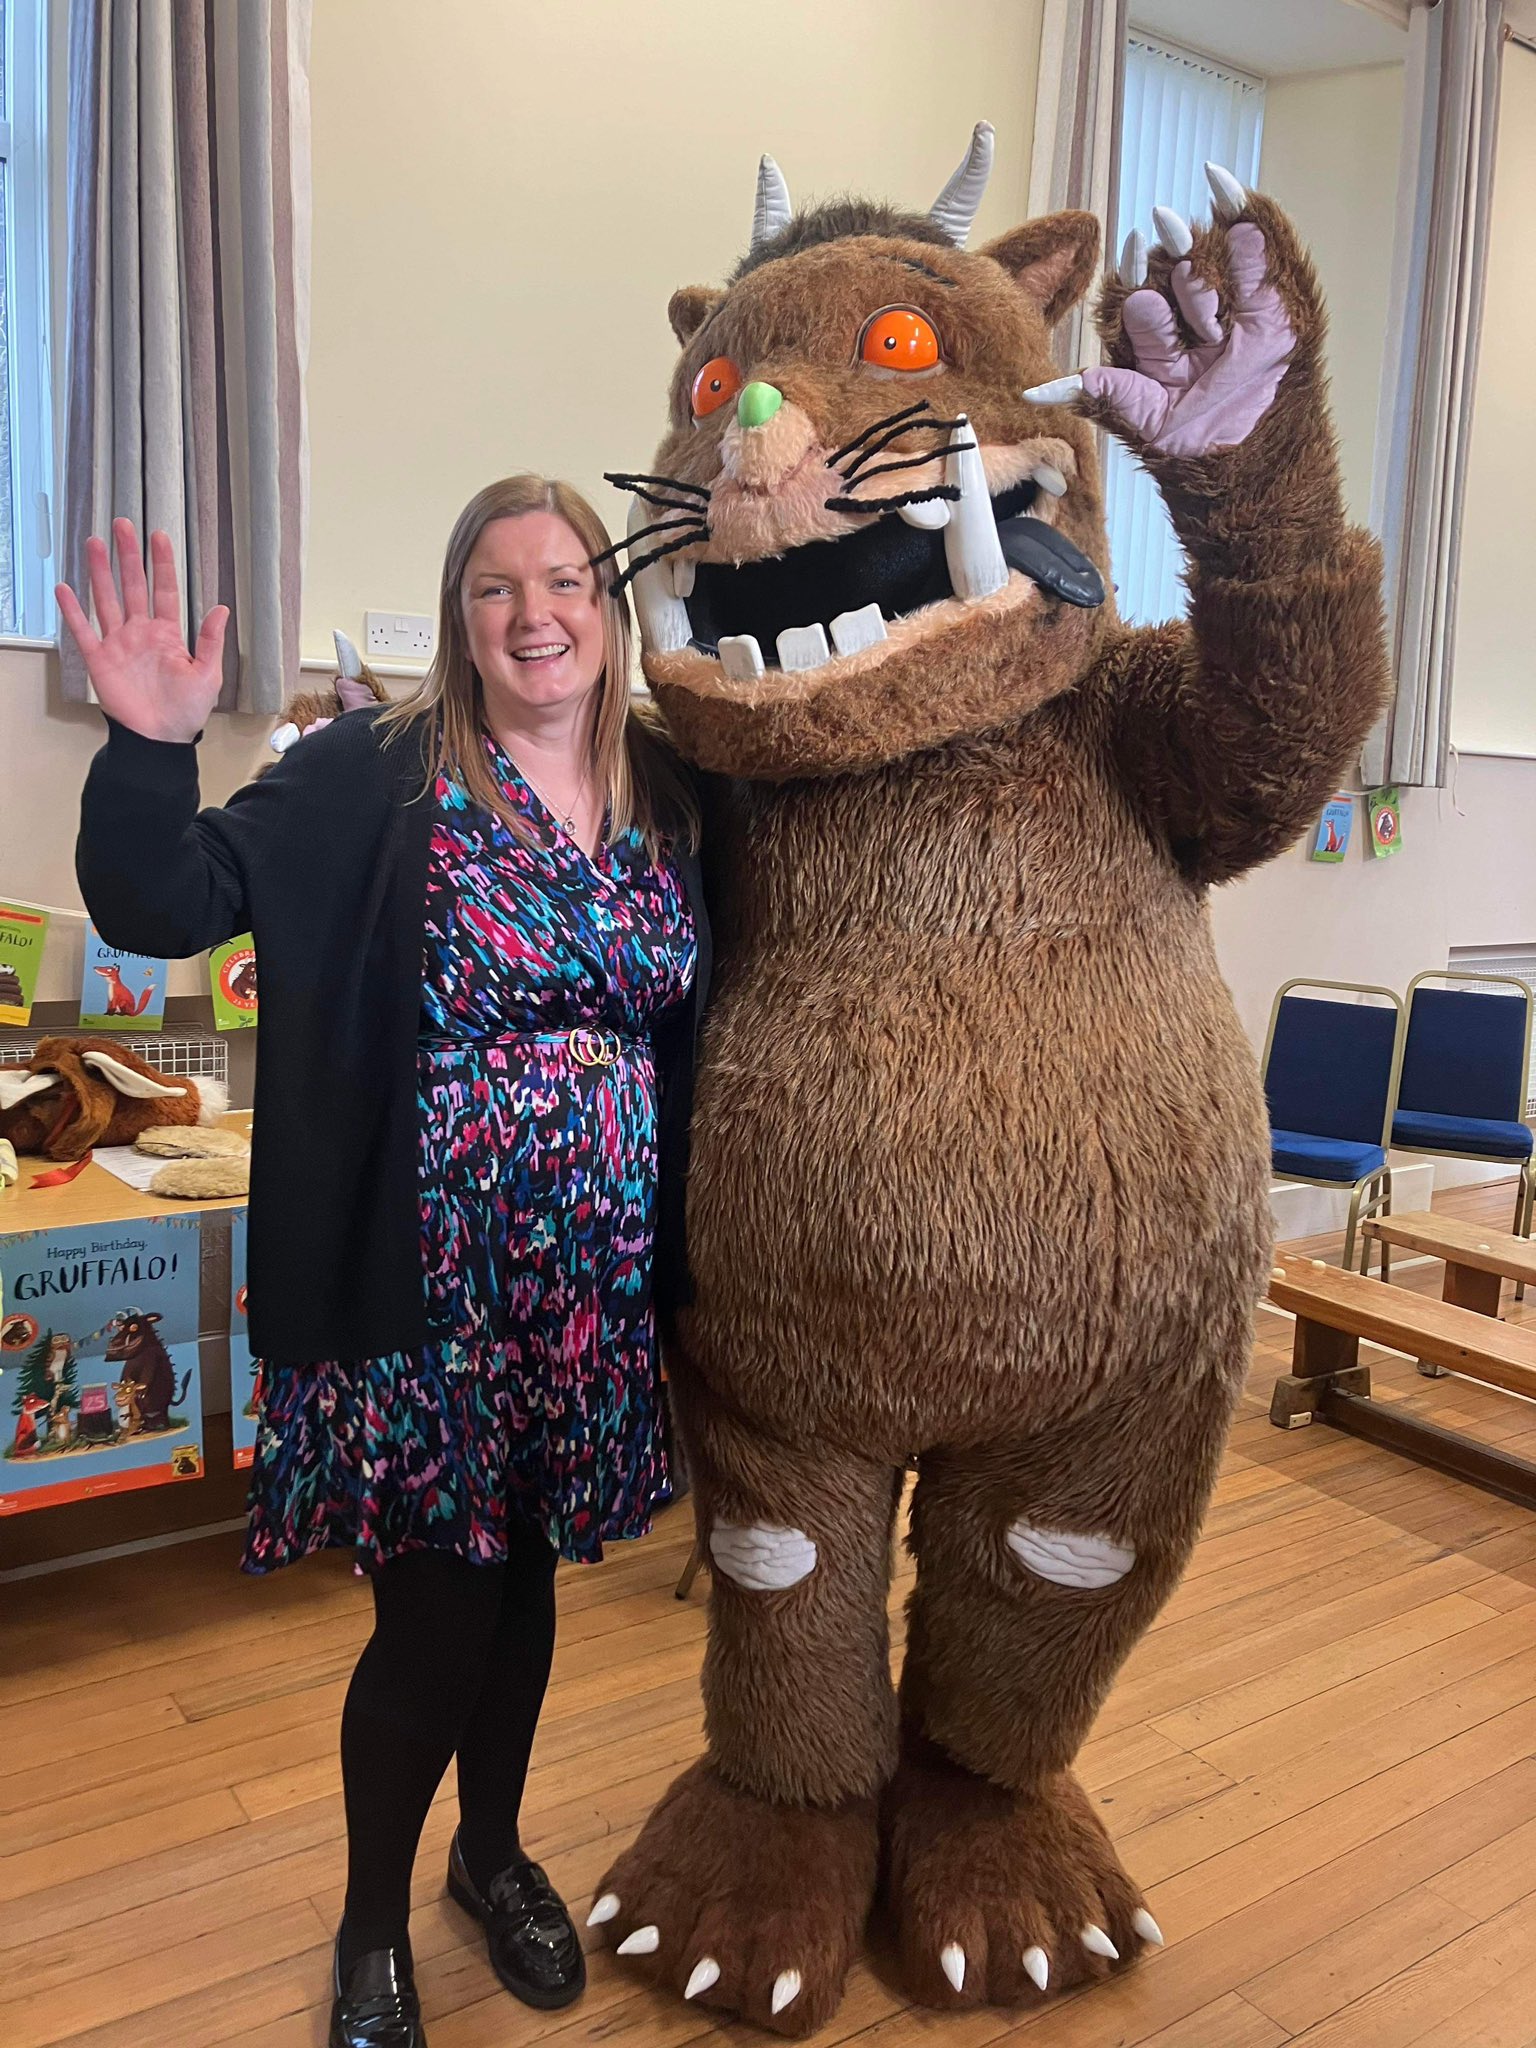 Julia Donaldson returns to Angus primary school to celebrate The Gruffalo's  25th birthday, UK News